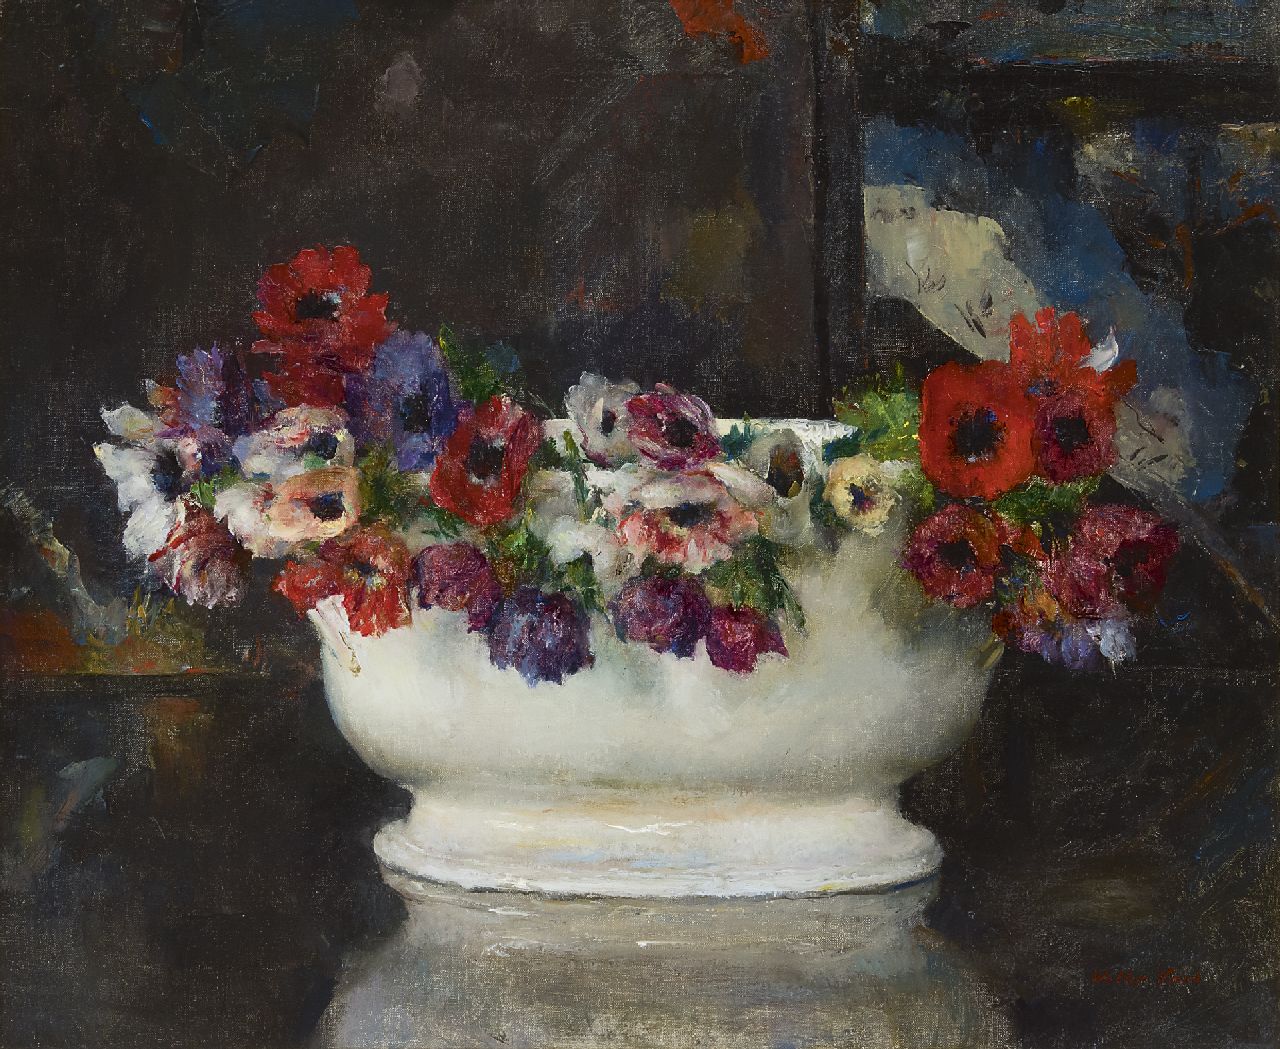 Vaes W.  | Walter Vaes, Anemones in a white flower bowl, oil on canvas 50.6 x 60.2 cm, signed l.r.